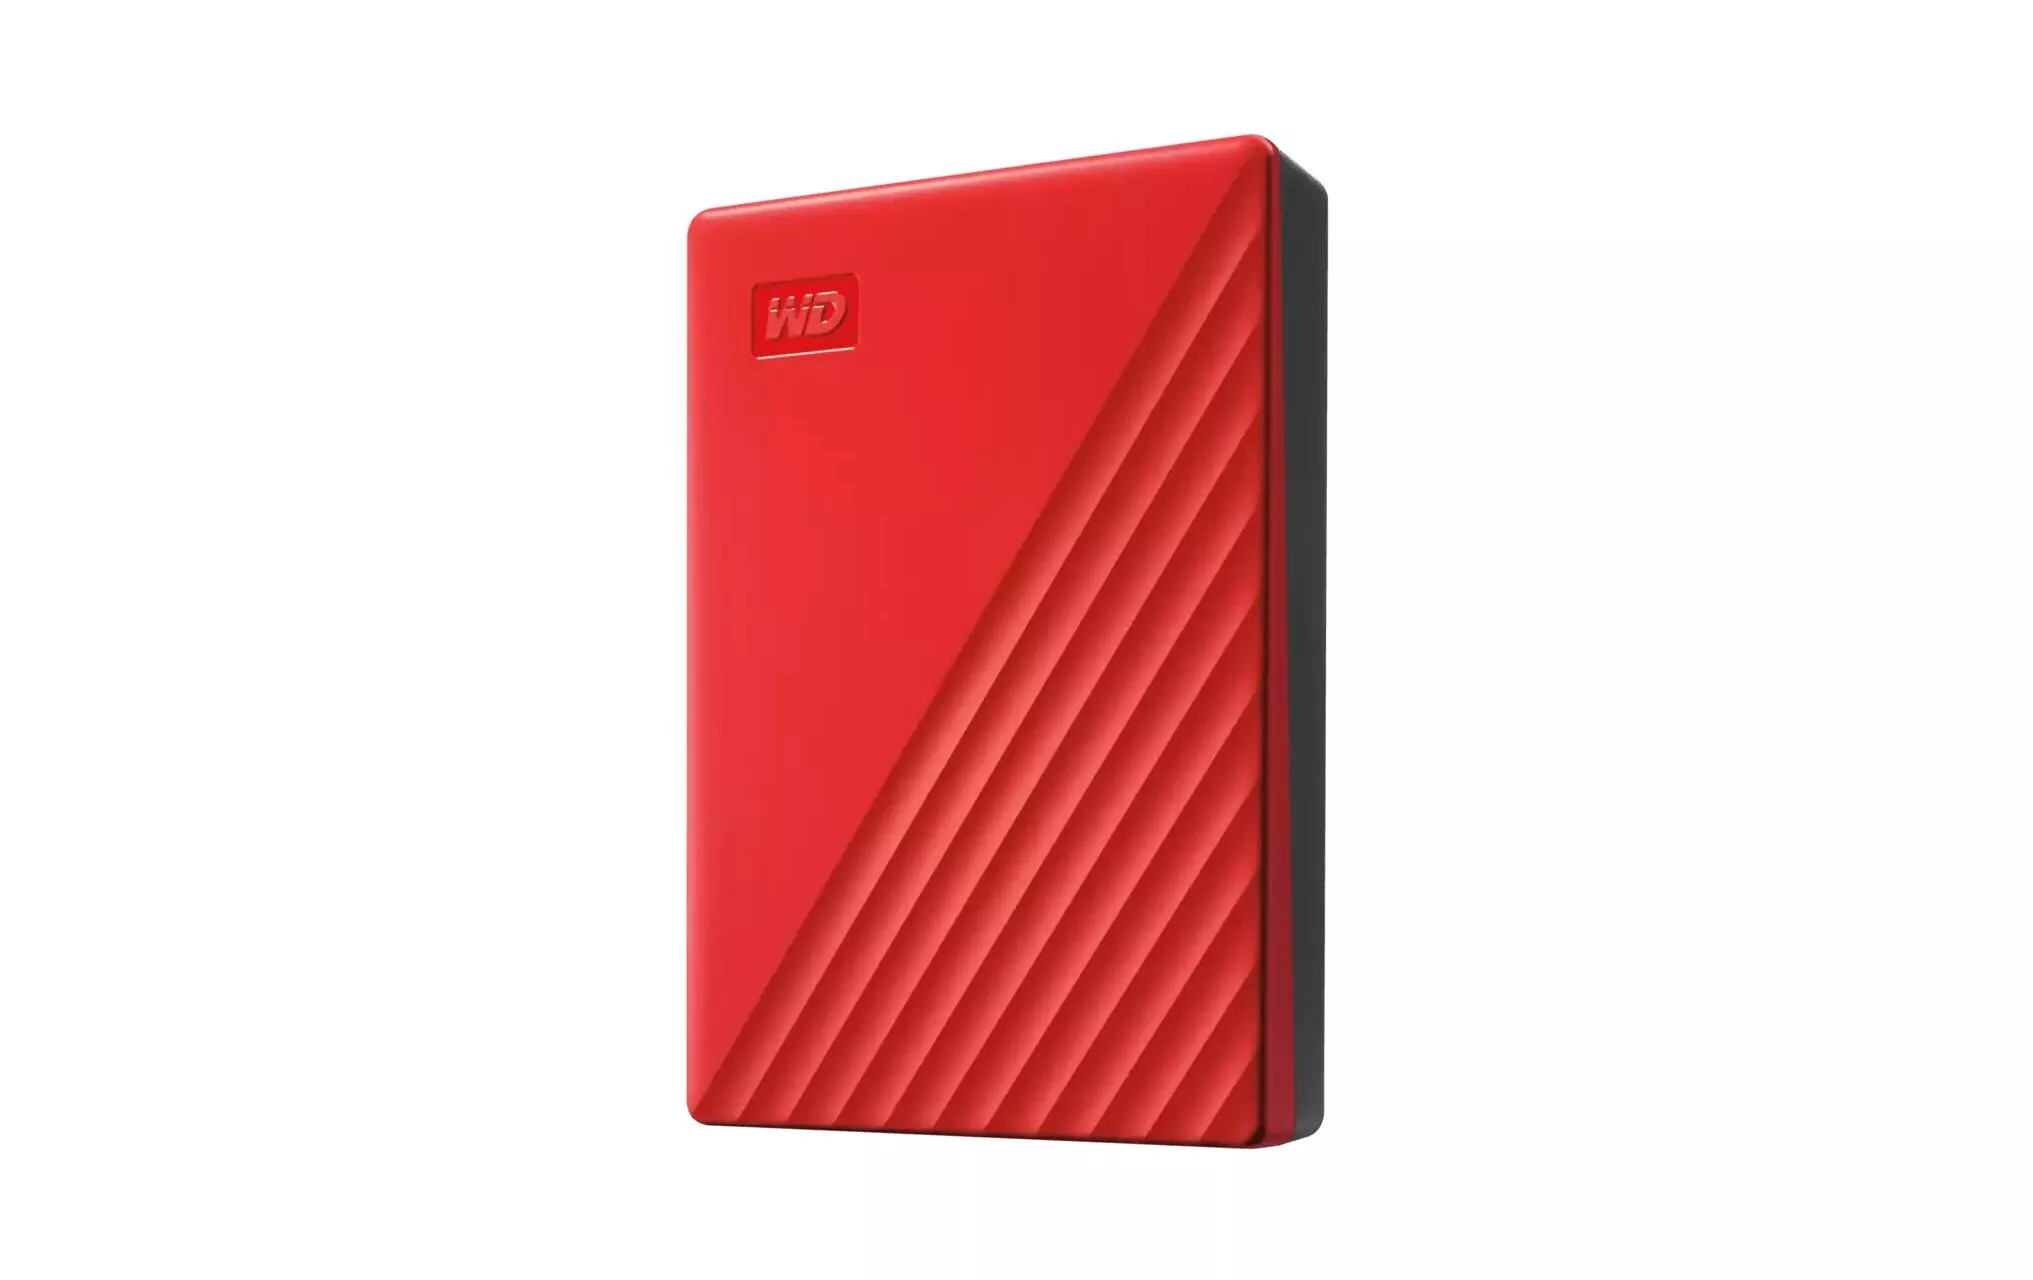 Disco rigido esterno Western Digital My Passport 6 TB, rosso